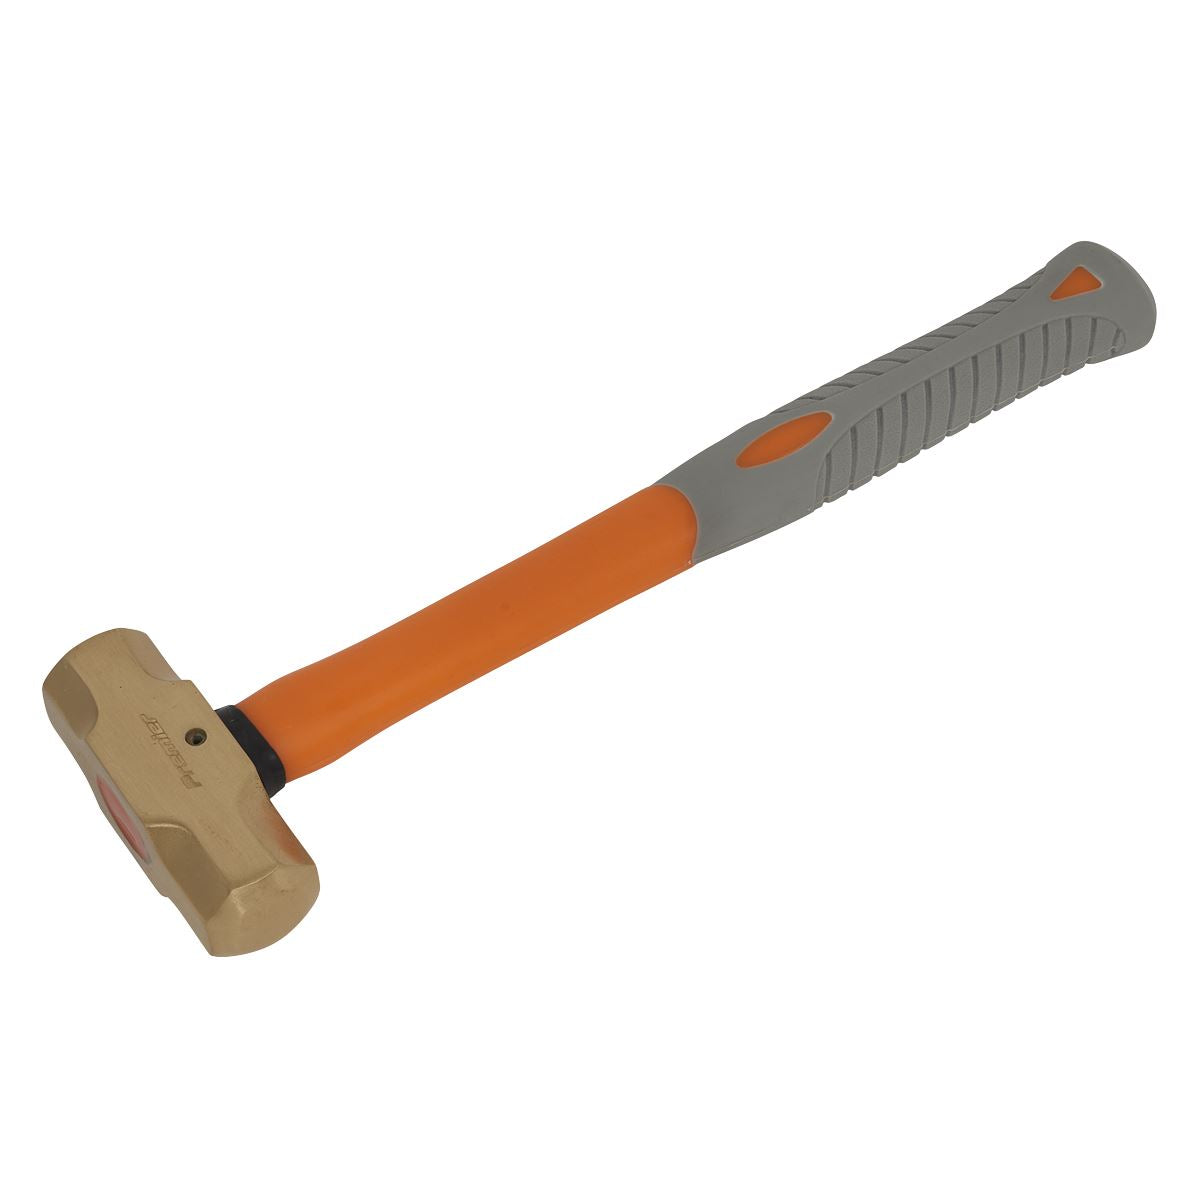 Sealey Premier Sledge Hammer 1lb - Non-Sparking